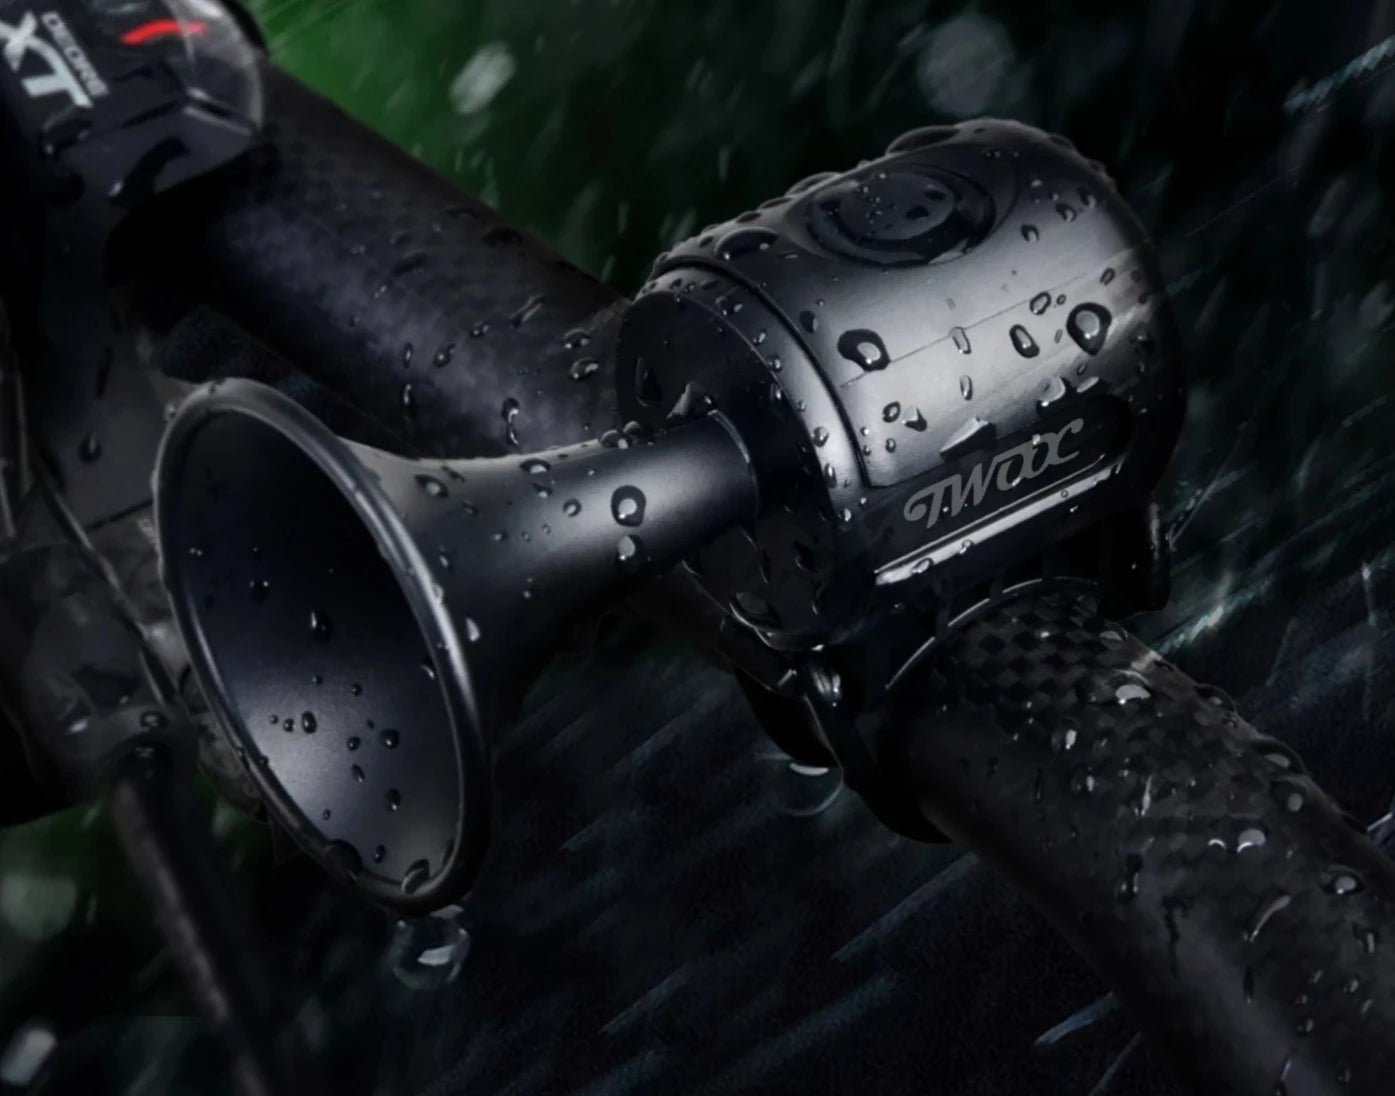 Buzina de Bicicleta Elétrica de Segurança Para Bike a Prova D'Água - Ciclinni